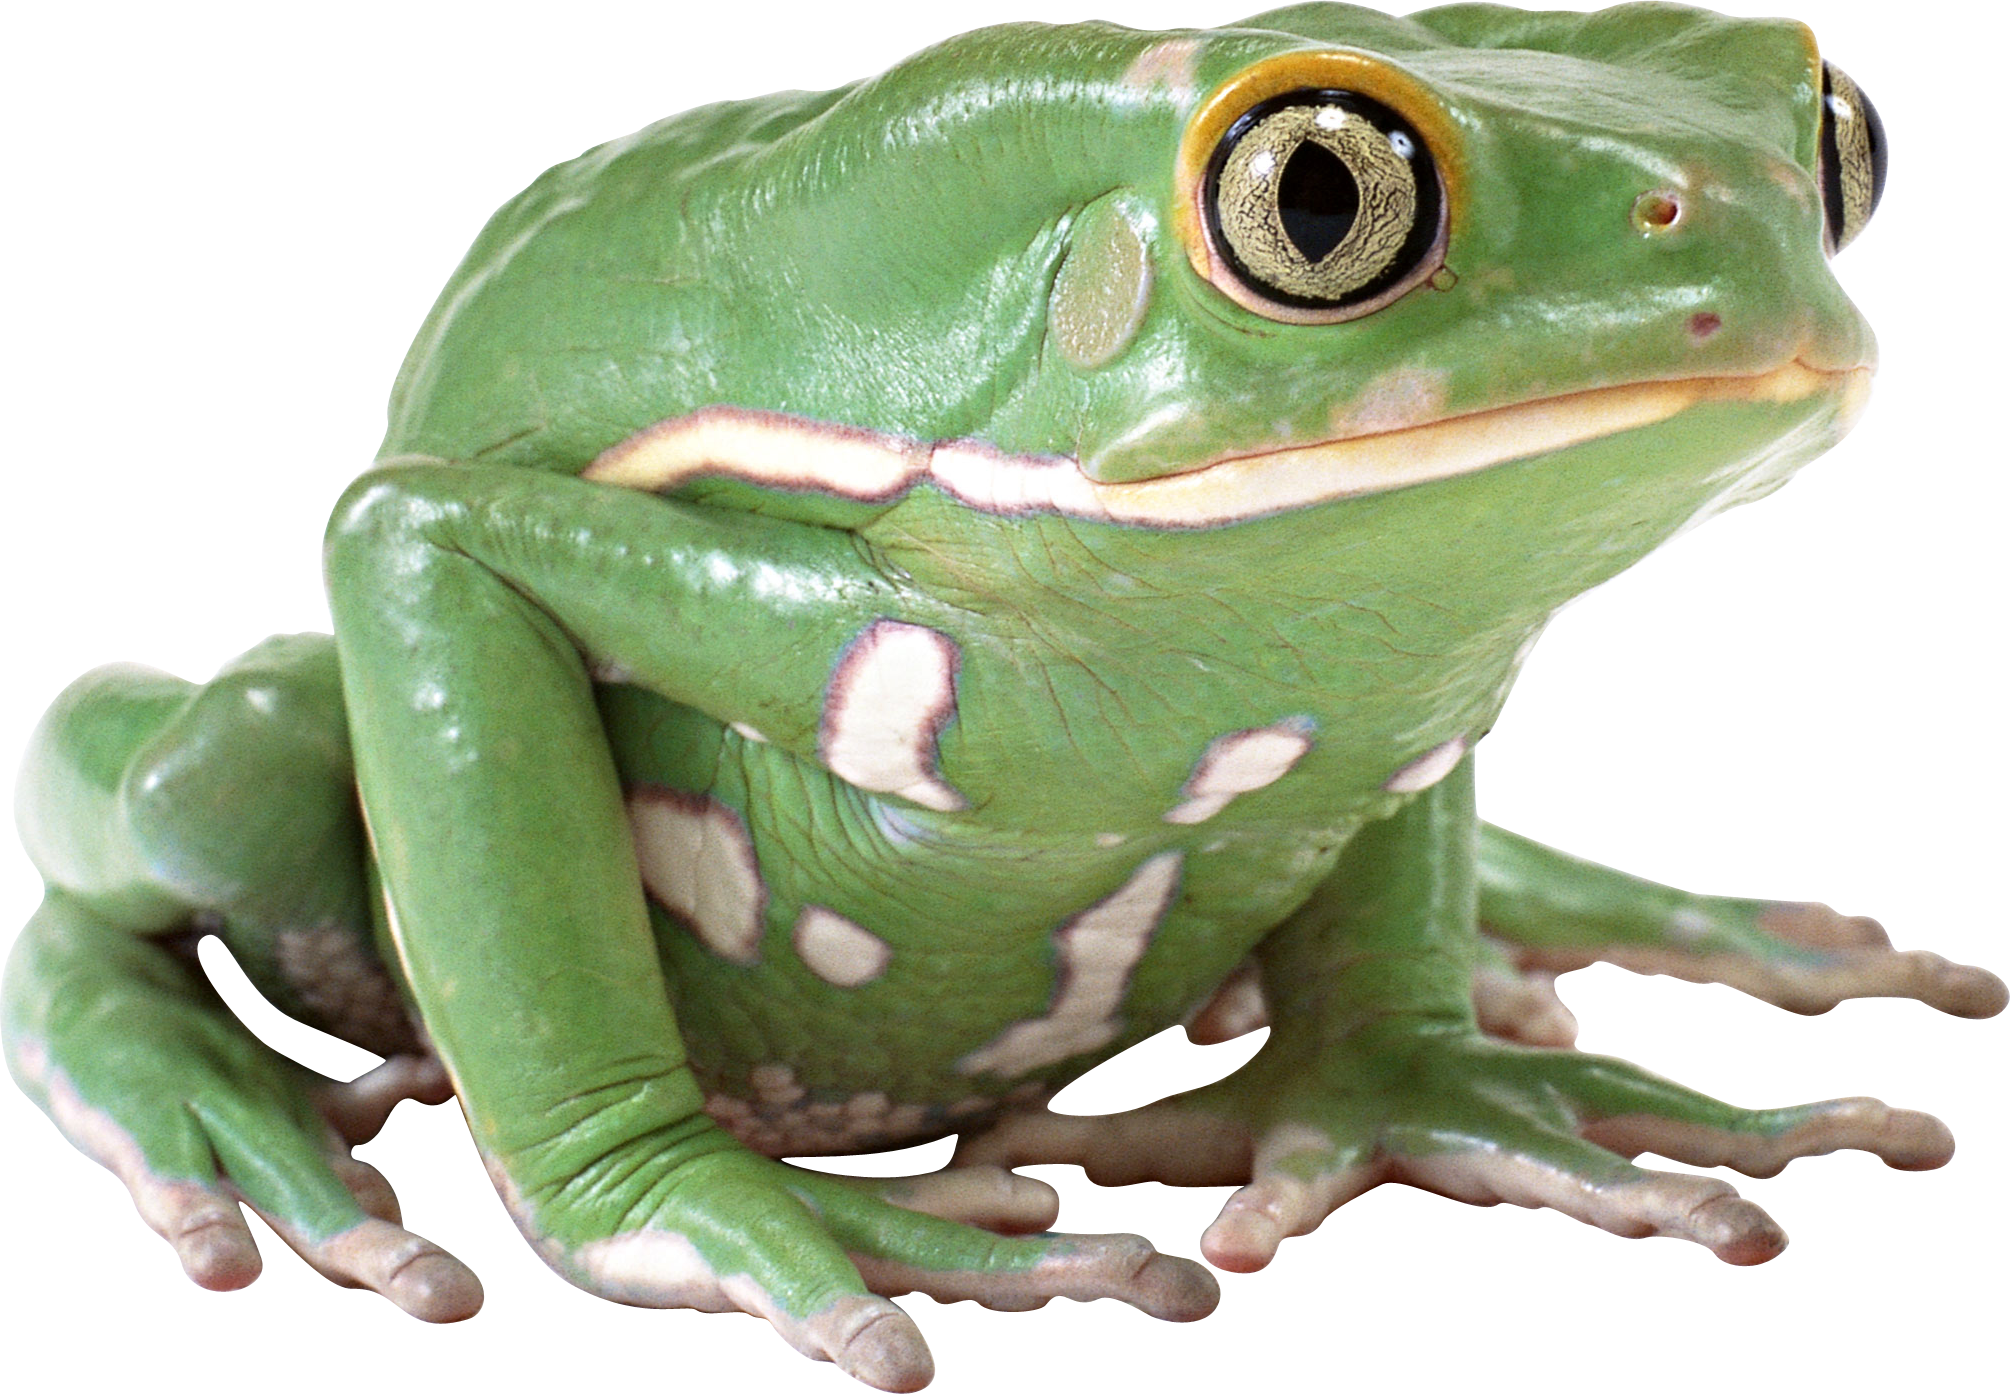 Top 88 Frog Clipart